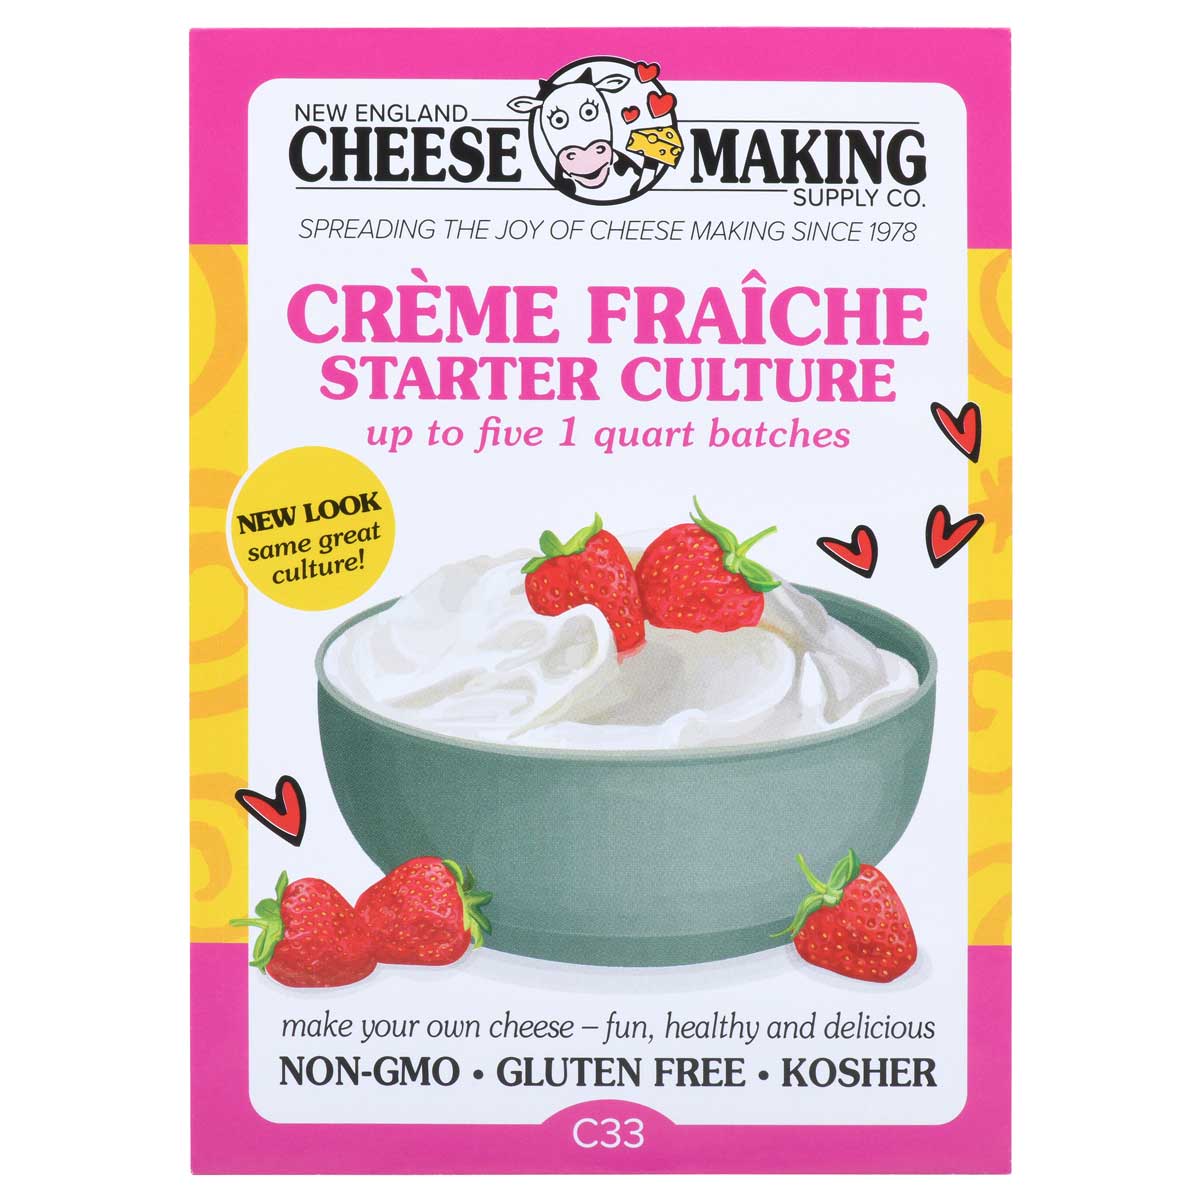 How to use creme fraiche